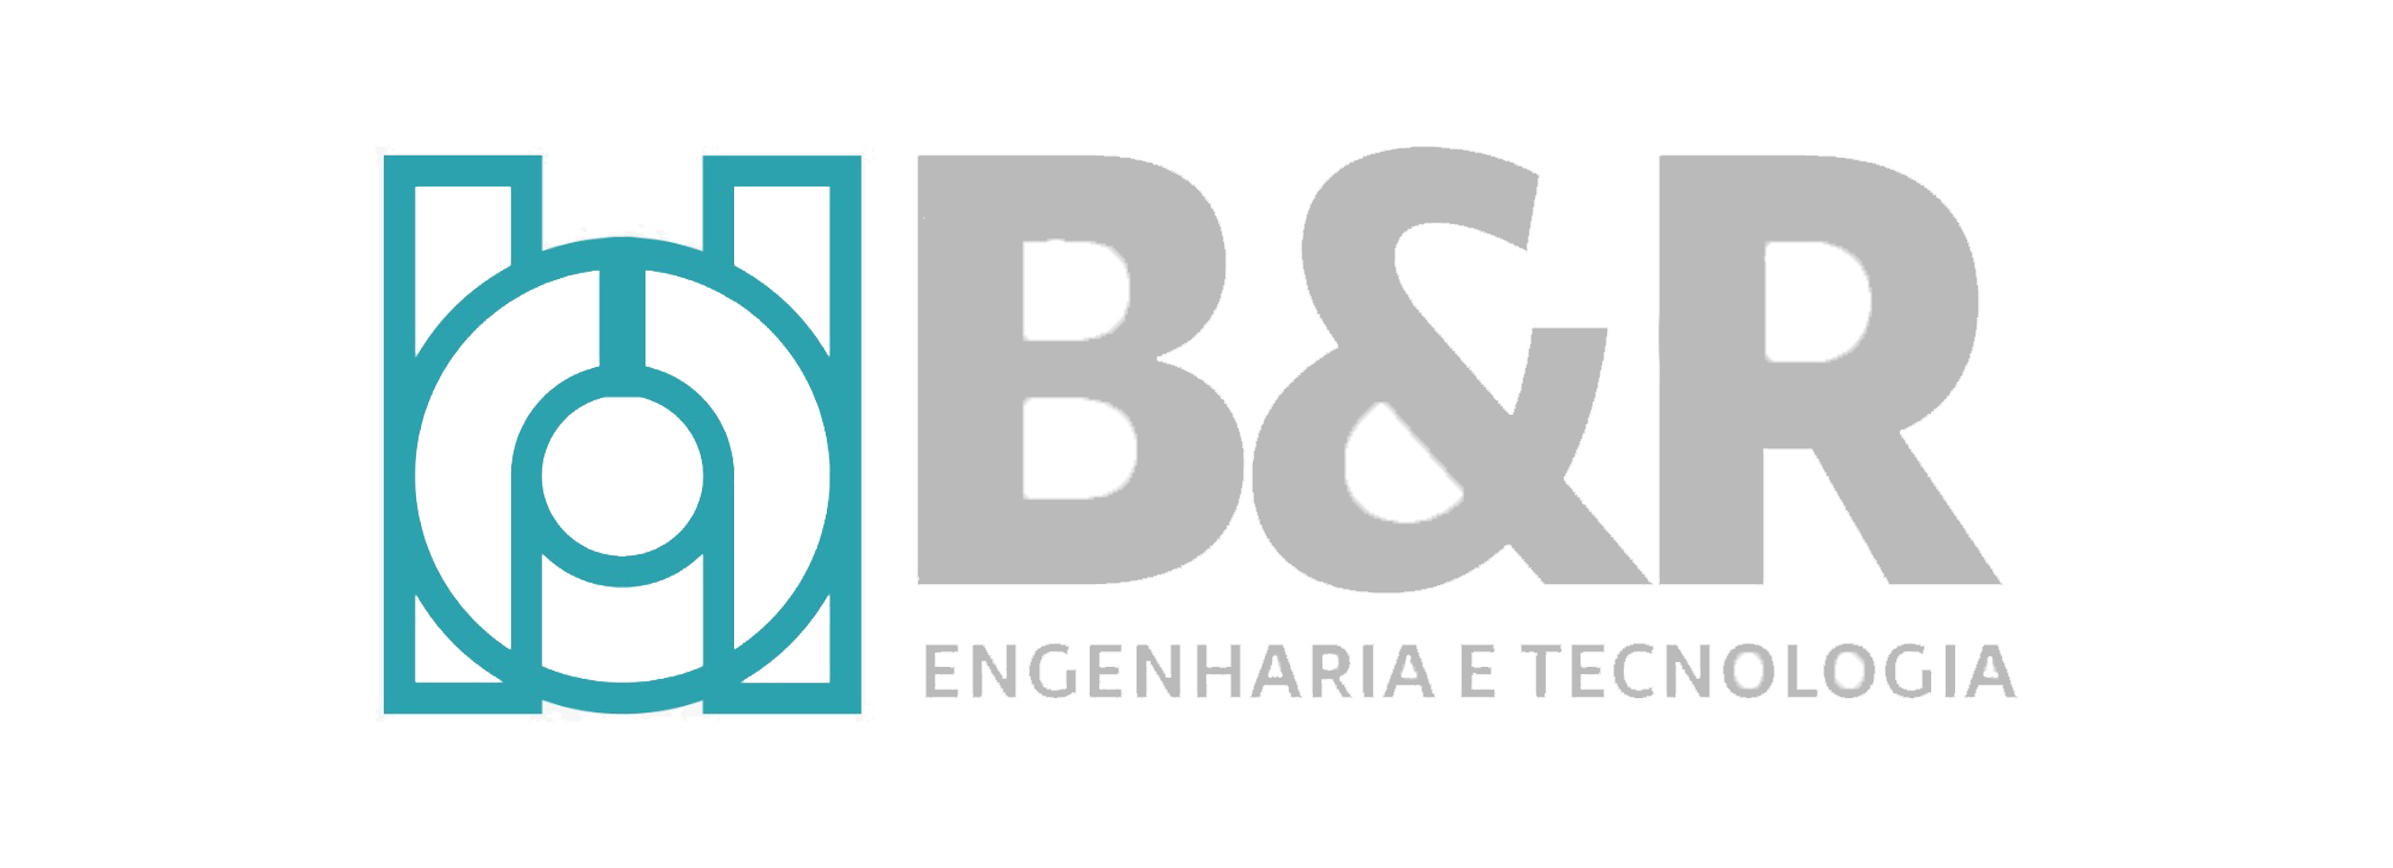 B&R Logo